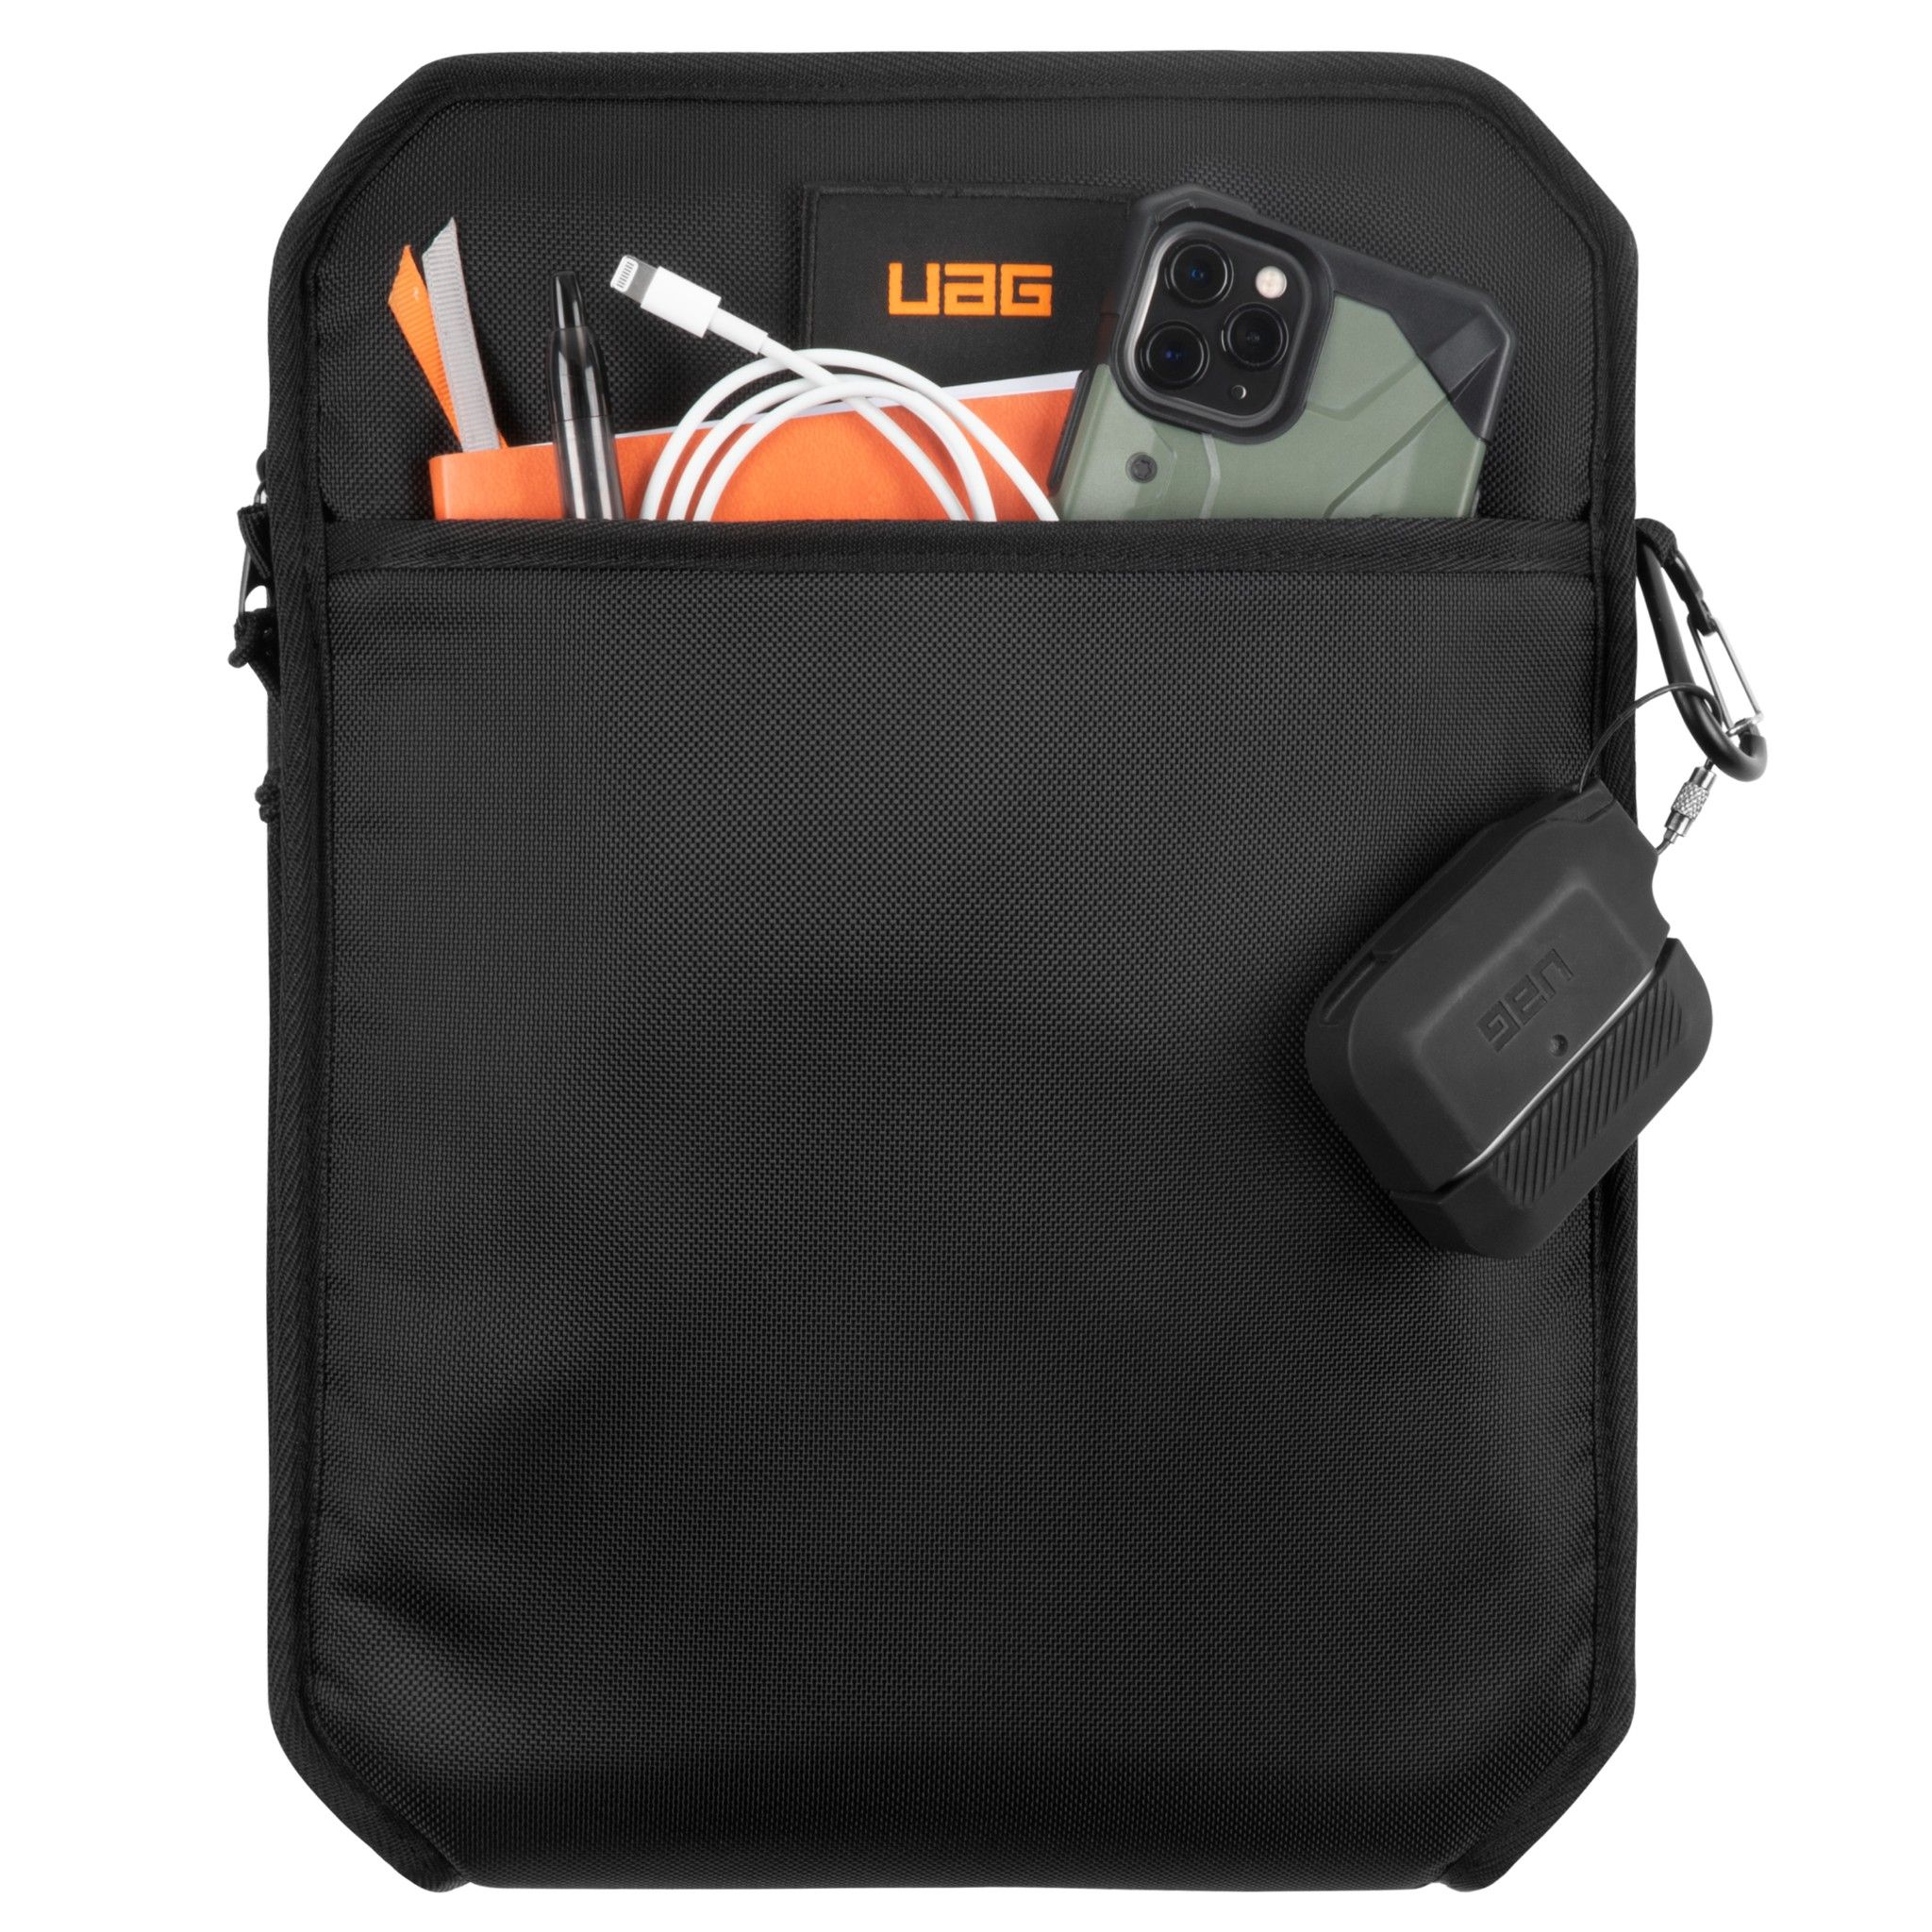  Túi chống sốc UAG Shock Sleeve Lite cho iPad Pro 12.9